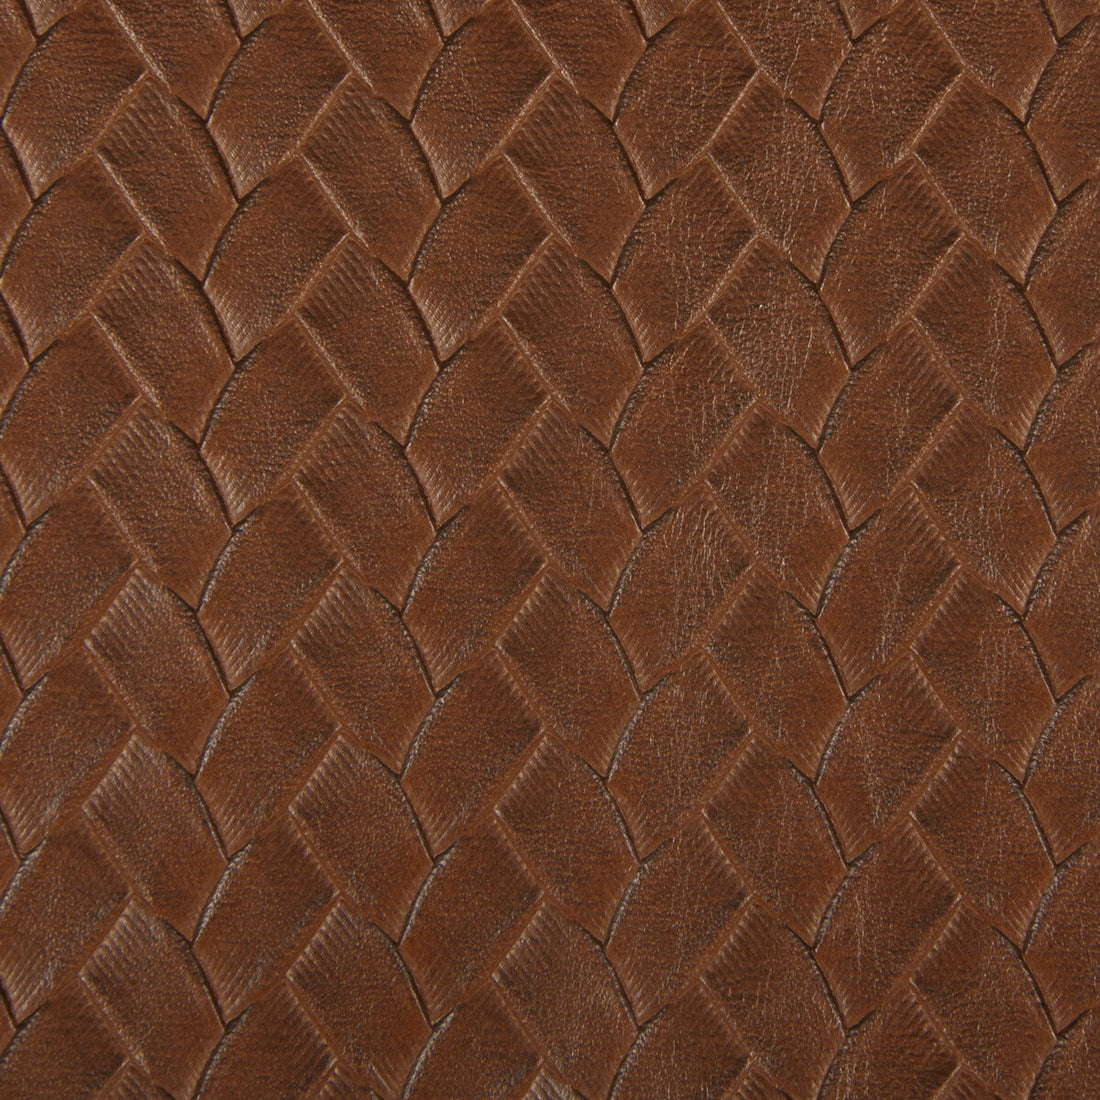 Kravet Design fabric in verlaine-6 color - pattern VERLAINE.6.0 - by Kravet Design